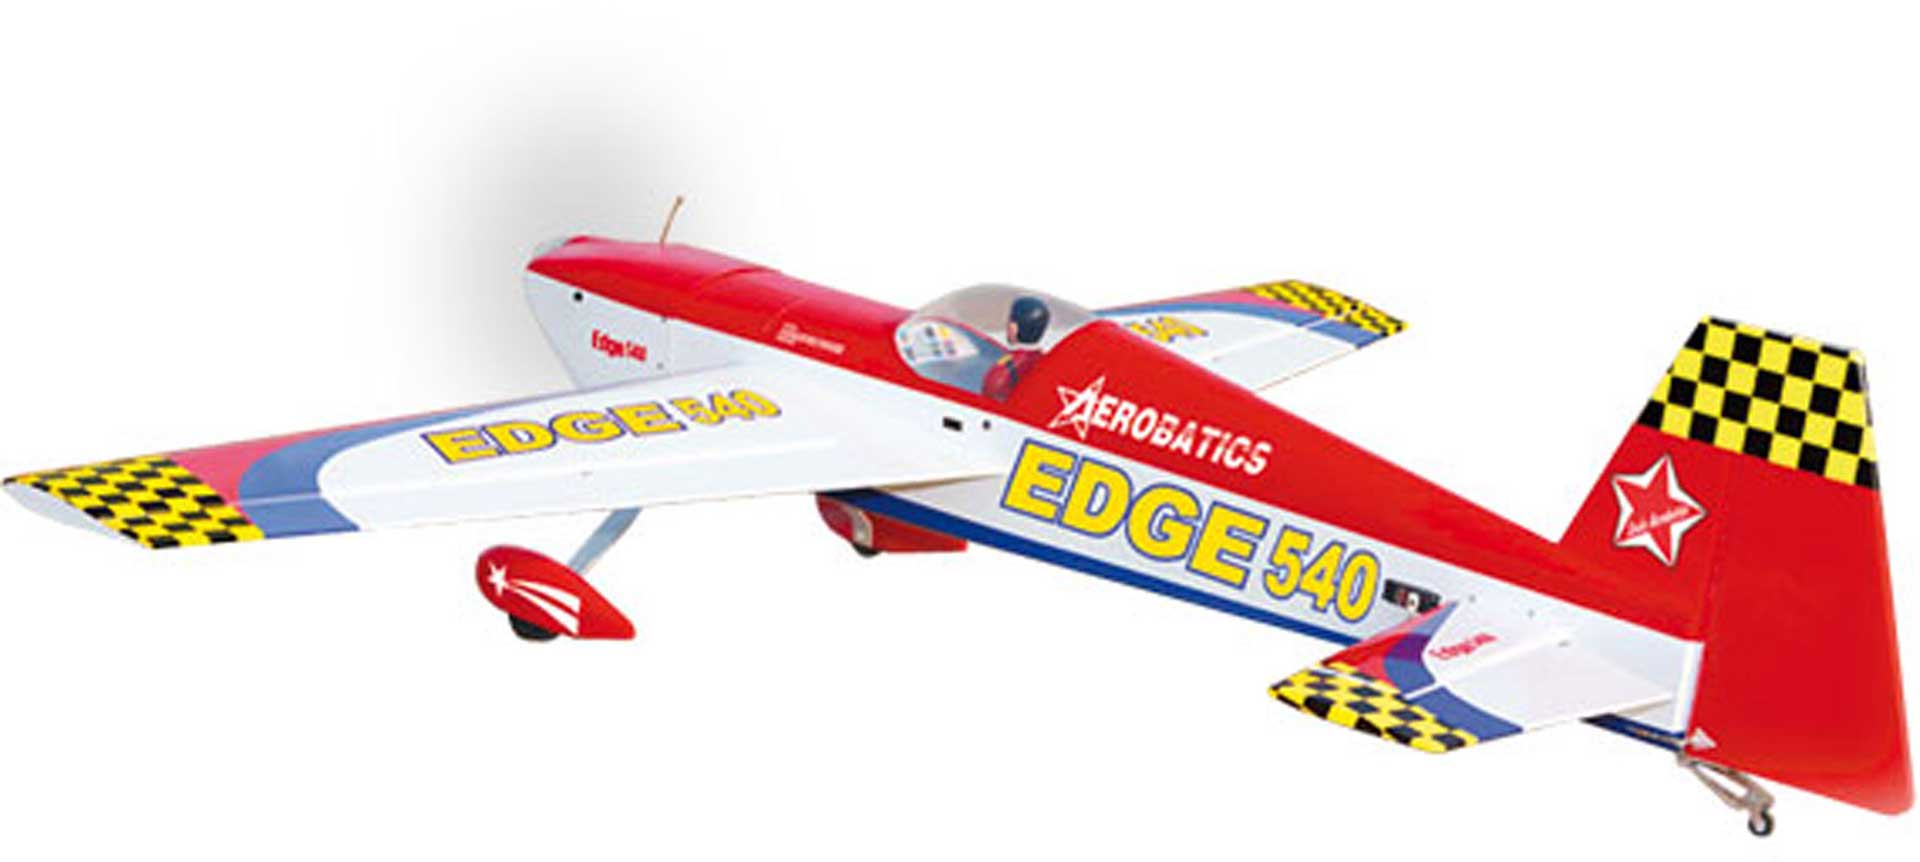 Seagull Models ( SG-Models ) EDGE 540 V2 180 ARF